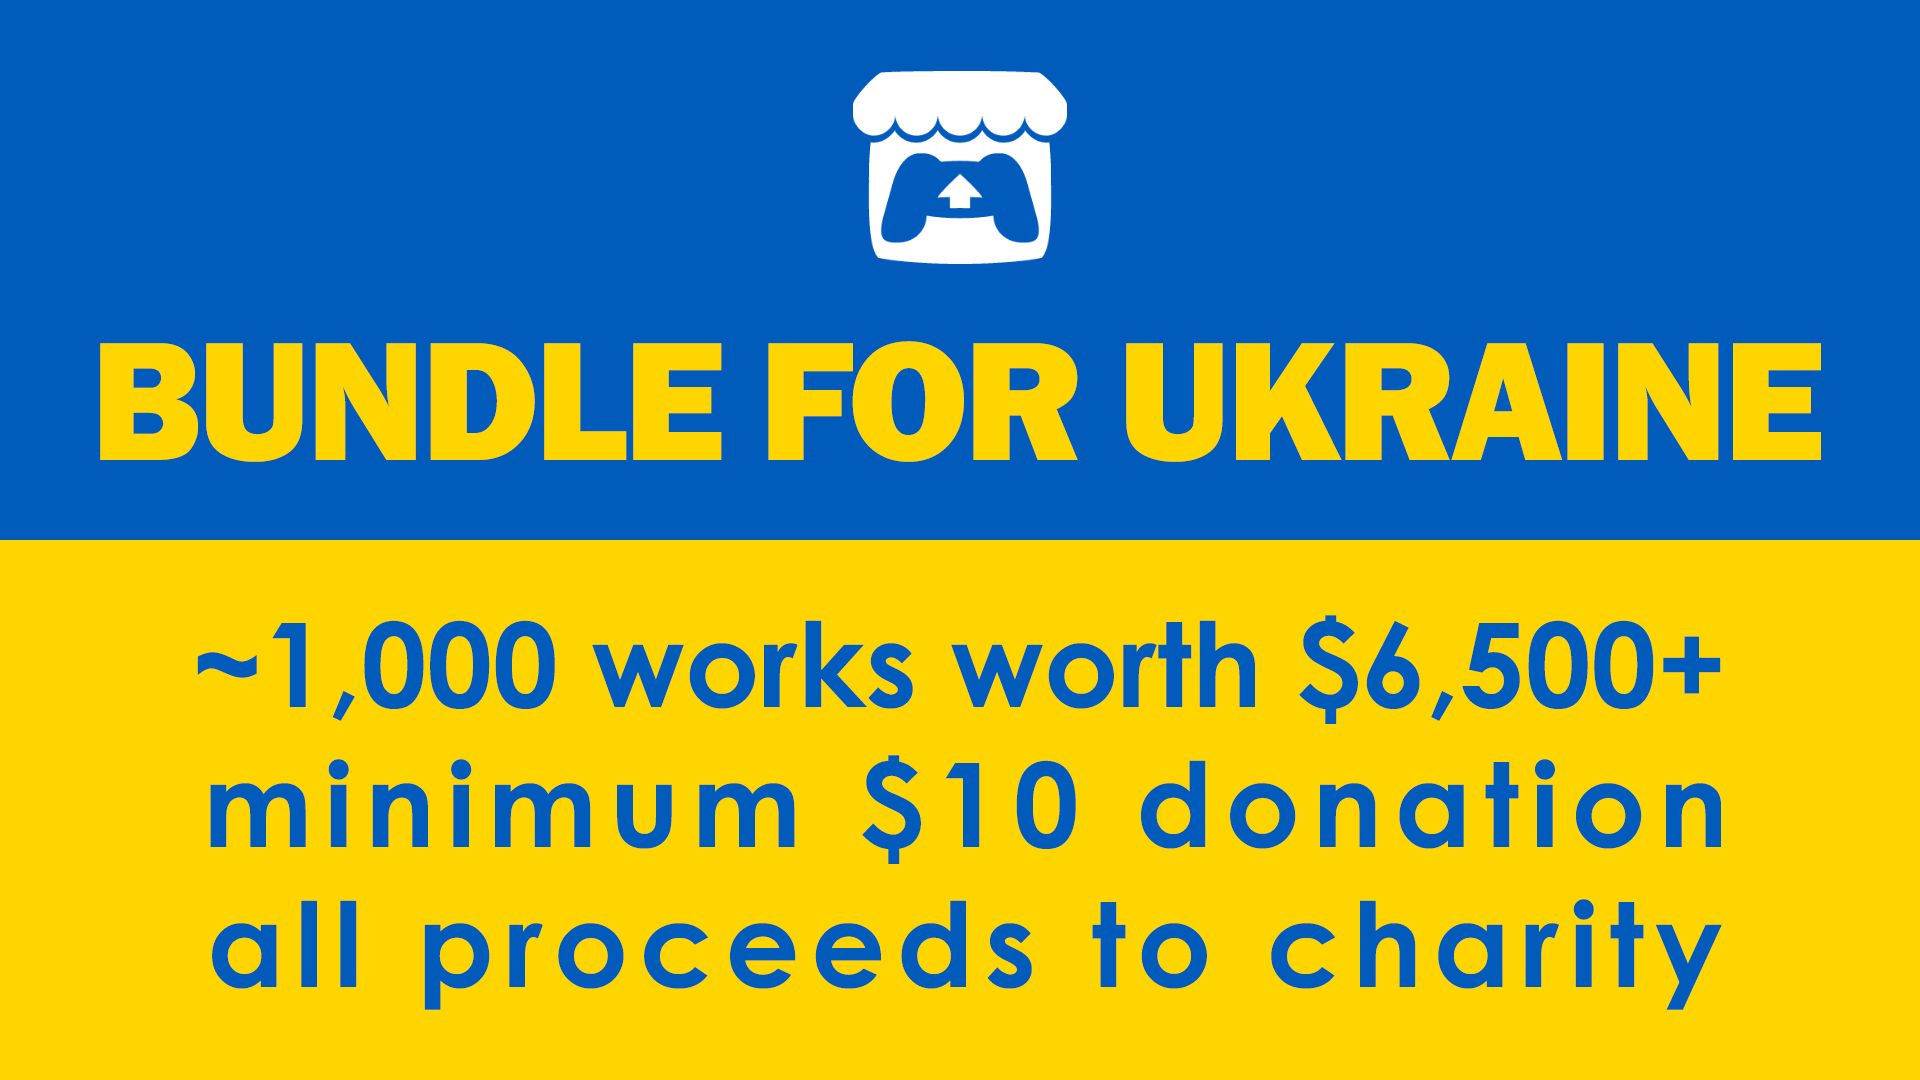 Artwork promoting the Itch.io Bundle for Ukraine.